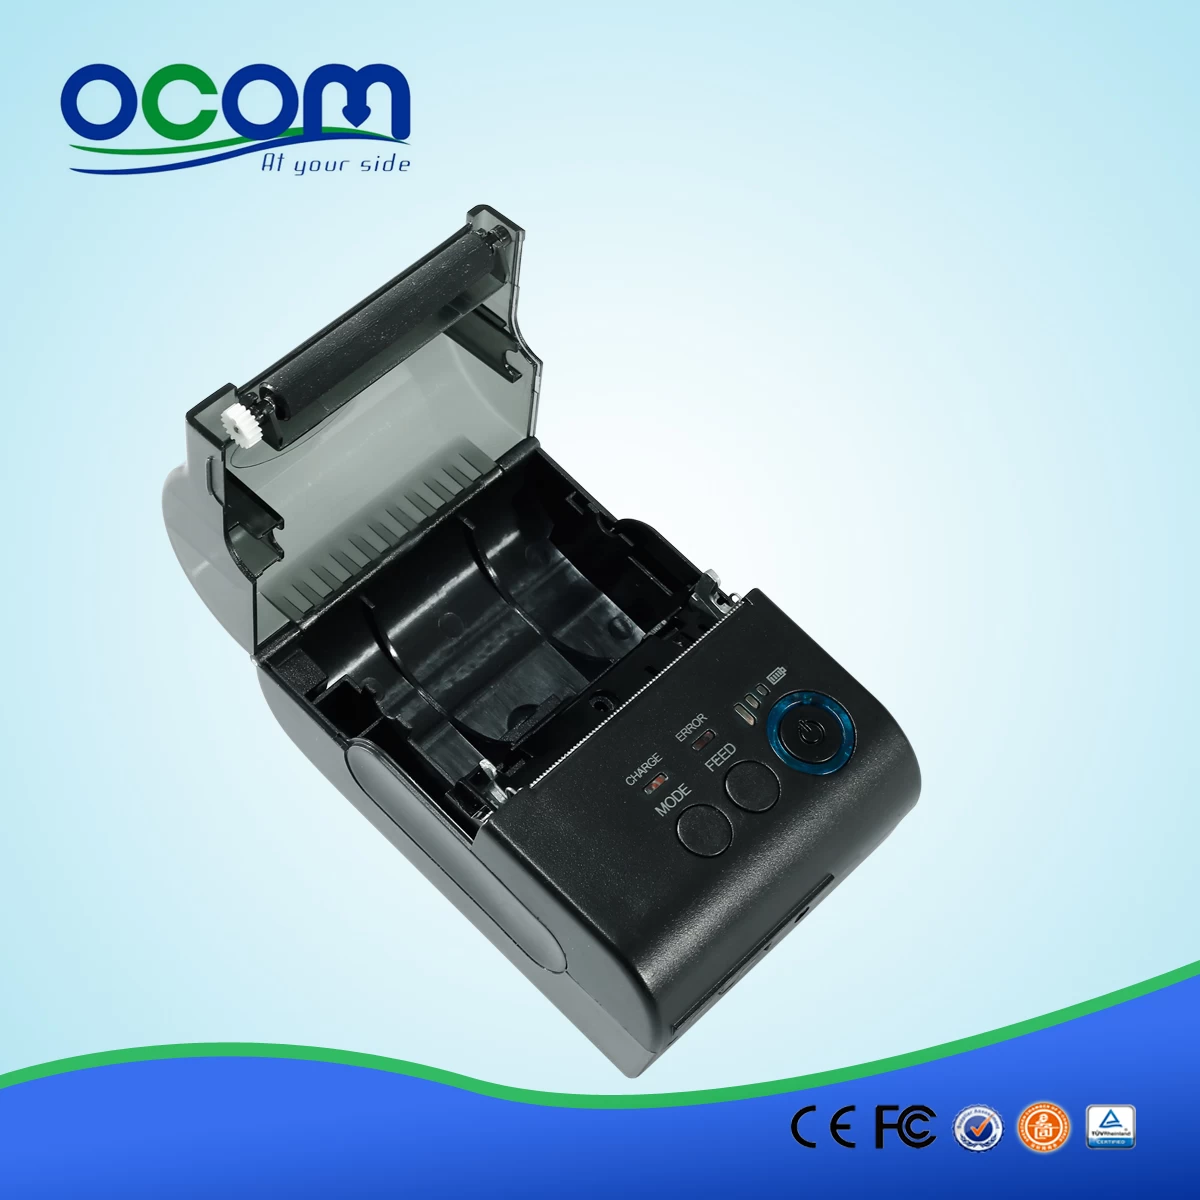 58mm High-quality Bluetooth Thermal Receipt Printer--OCPP-M03